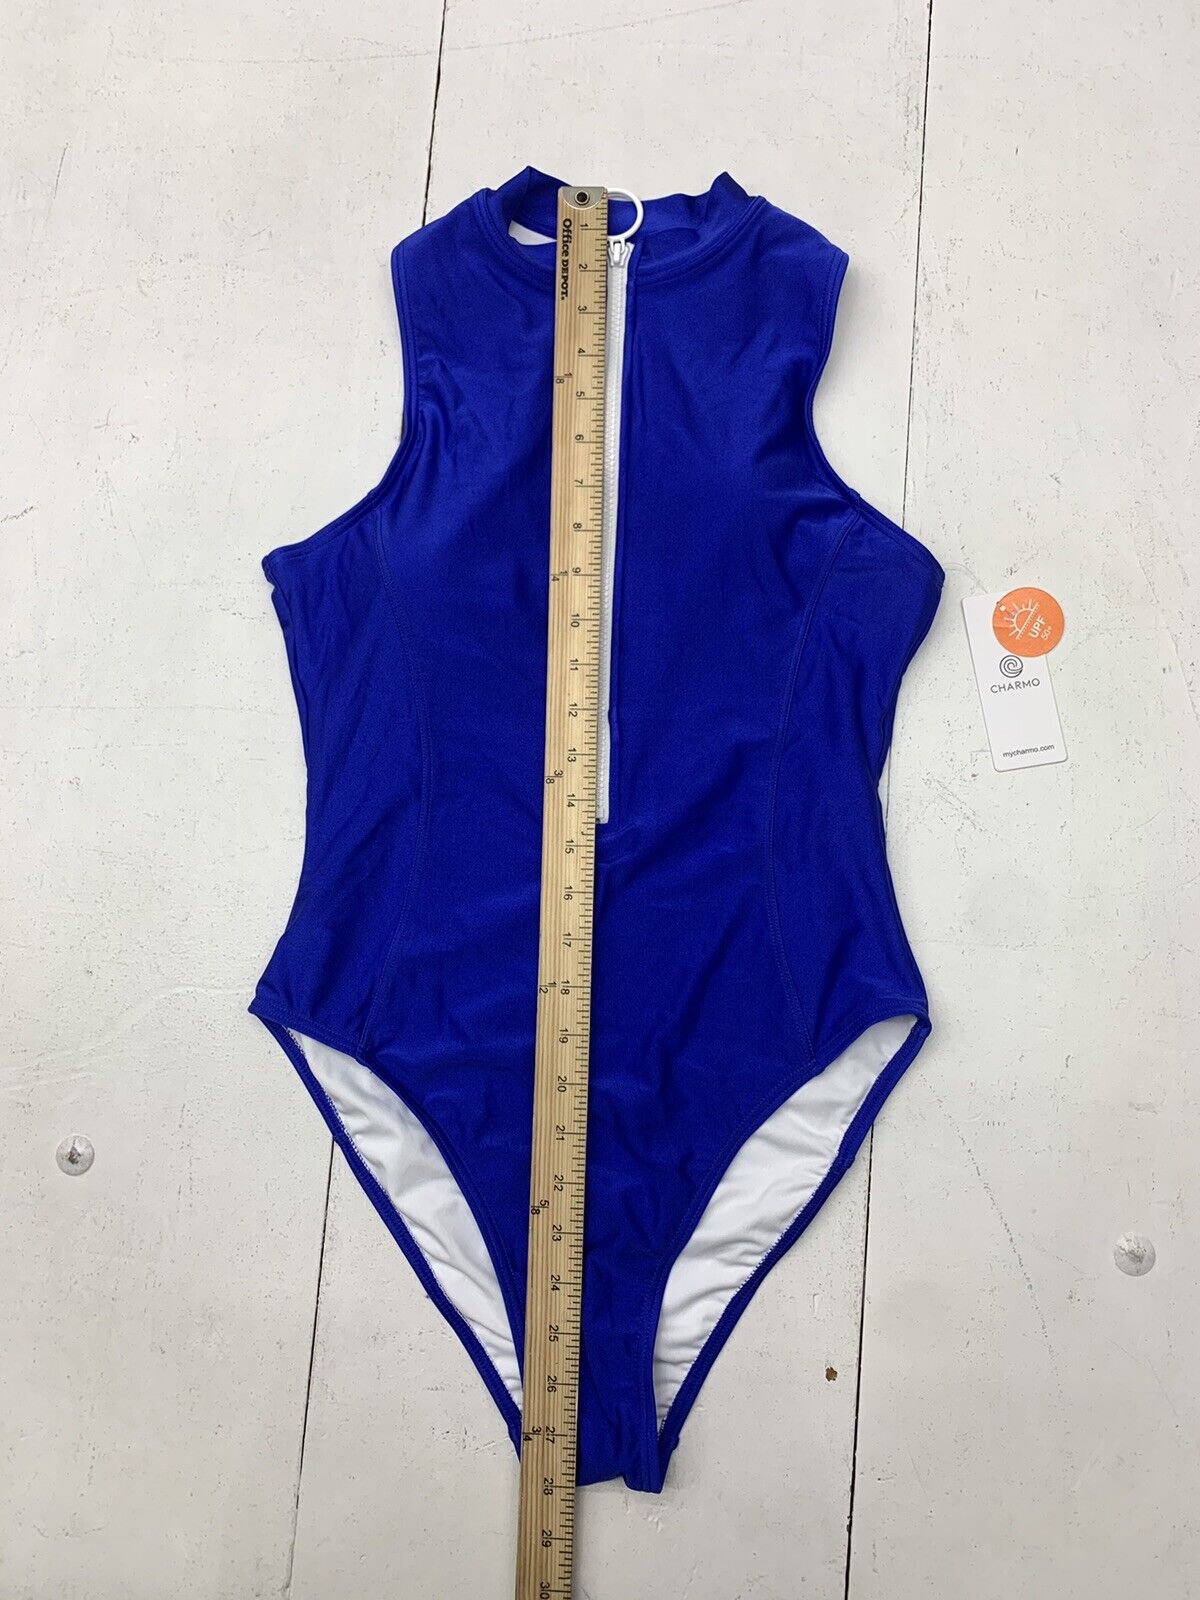 Charmo Womens Blue Fullzip Swim Suit Size Medium - beyond exchange